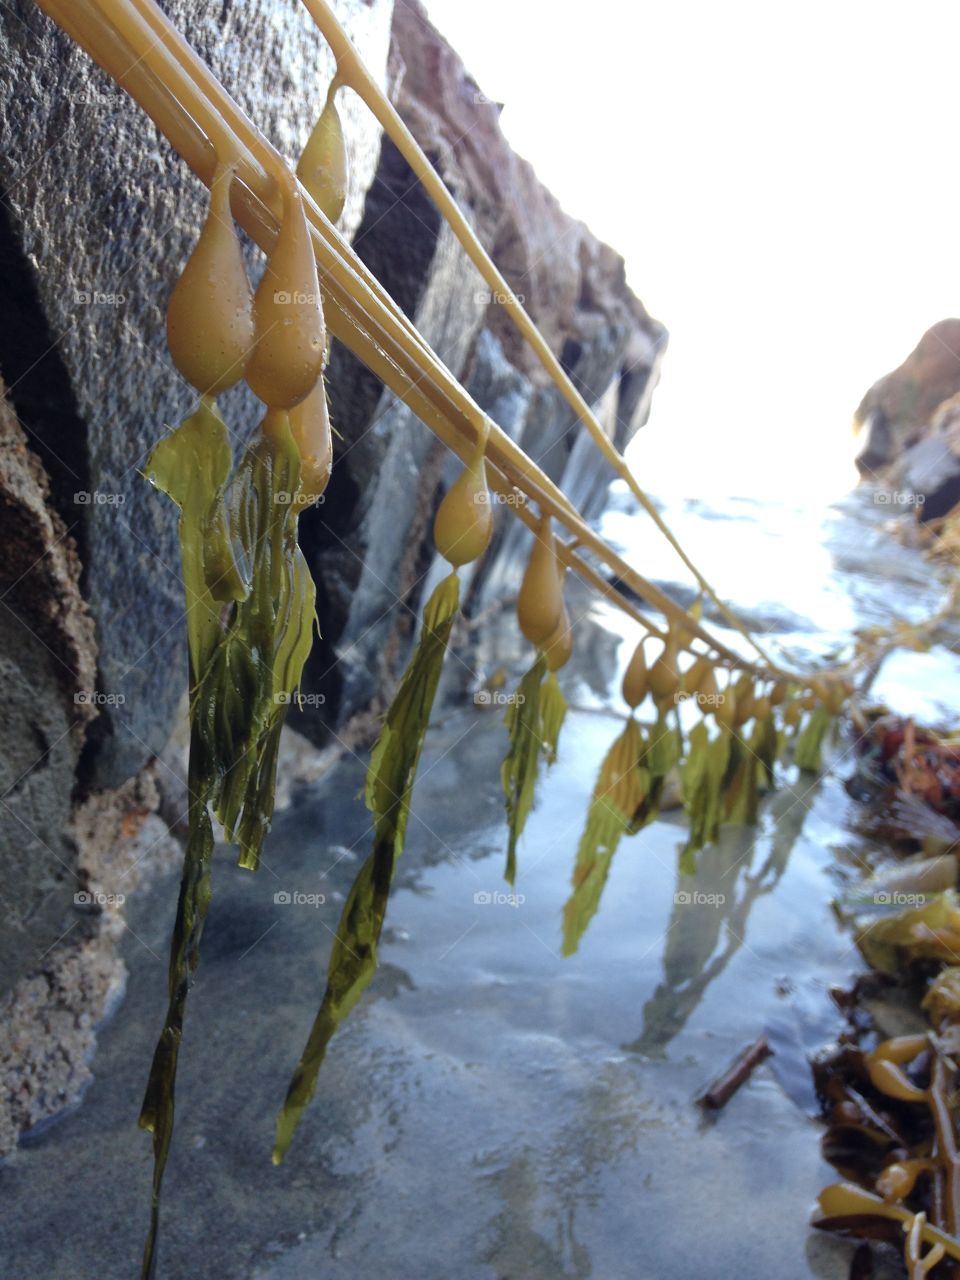 Strung kelp